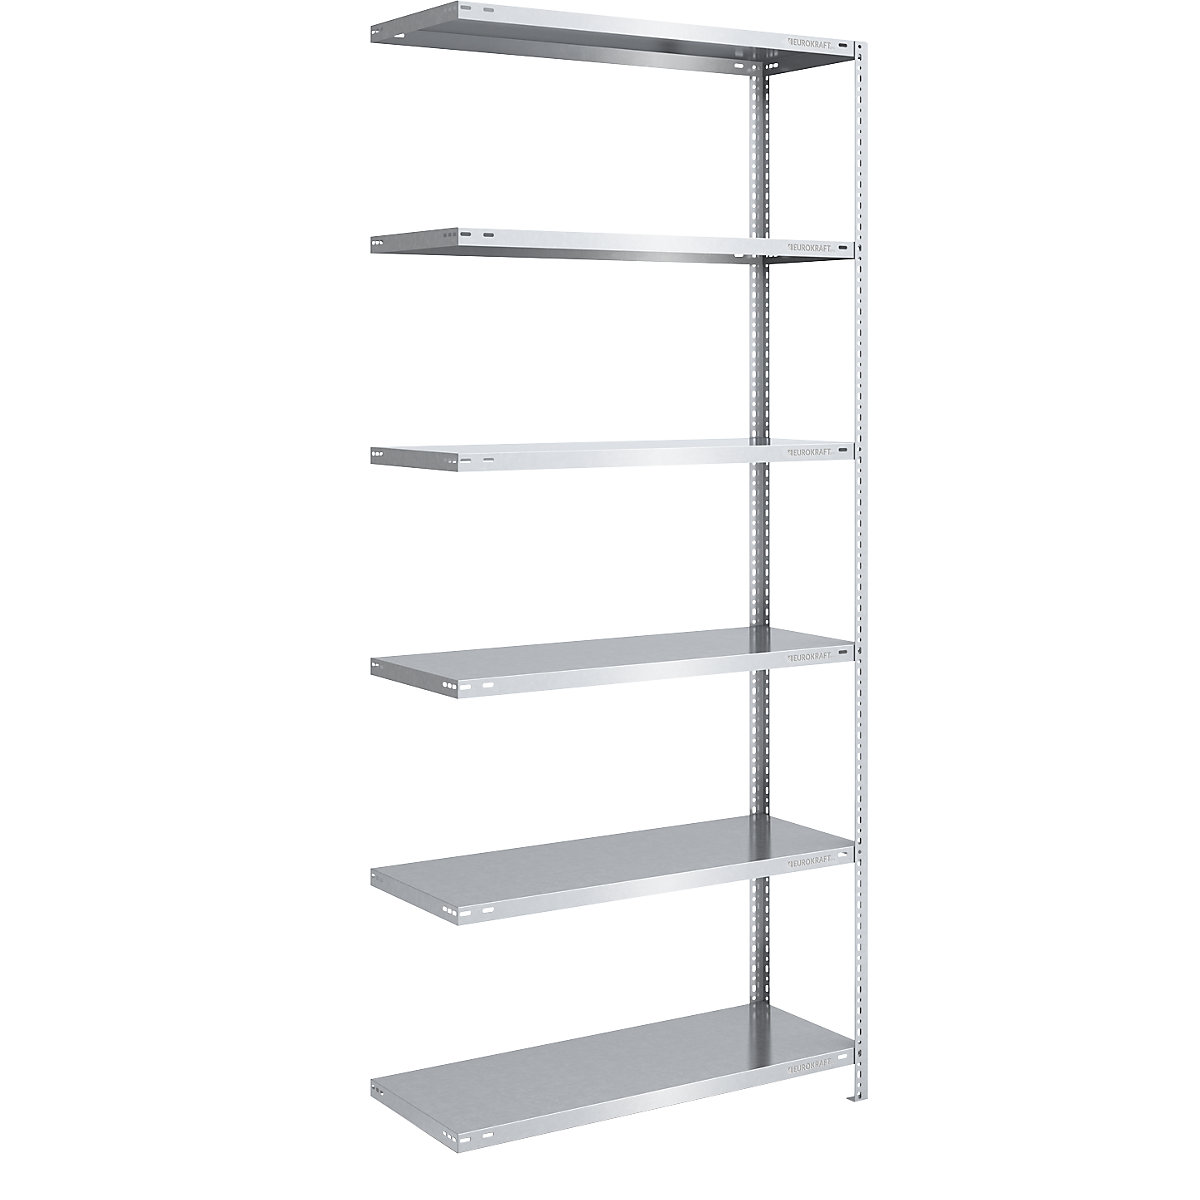 Bolt-together shelf unit, light duty, zinc plated – eurokraft pro, shelf unit height 2500 mm, shelf width 1000 mm, depth 500 mm, extension shelf unit-14